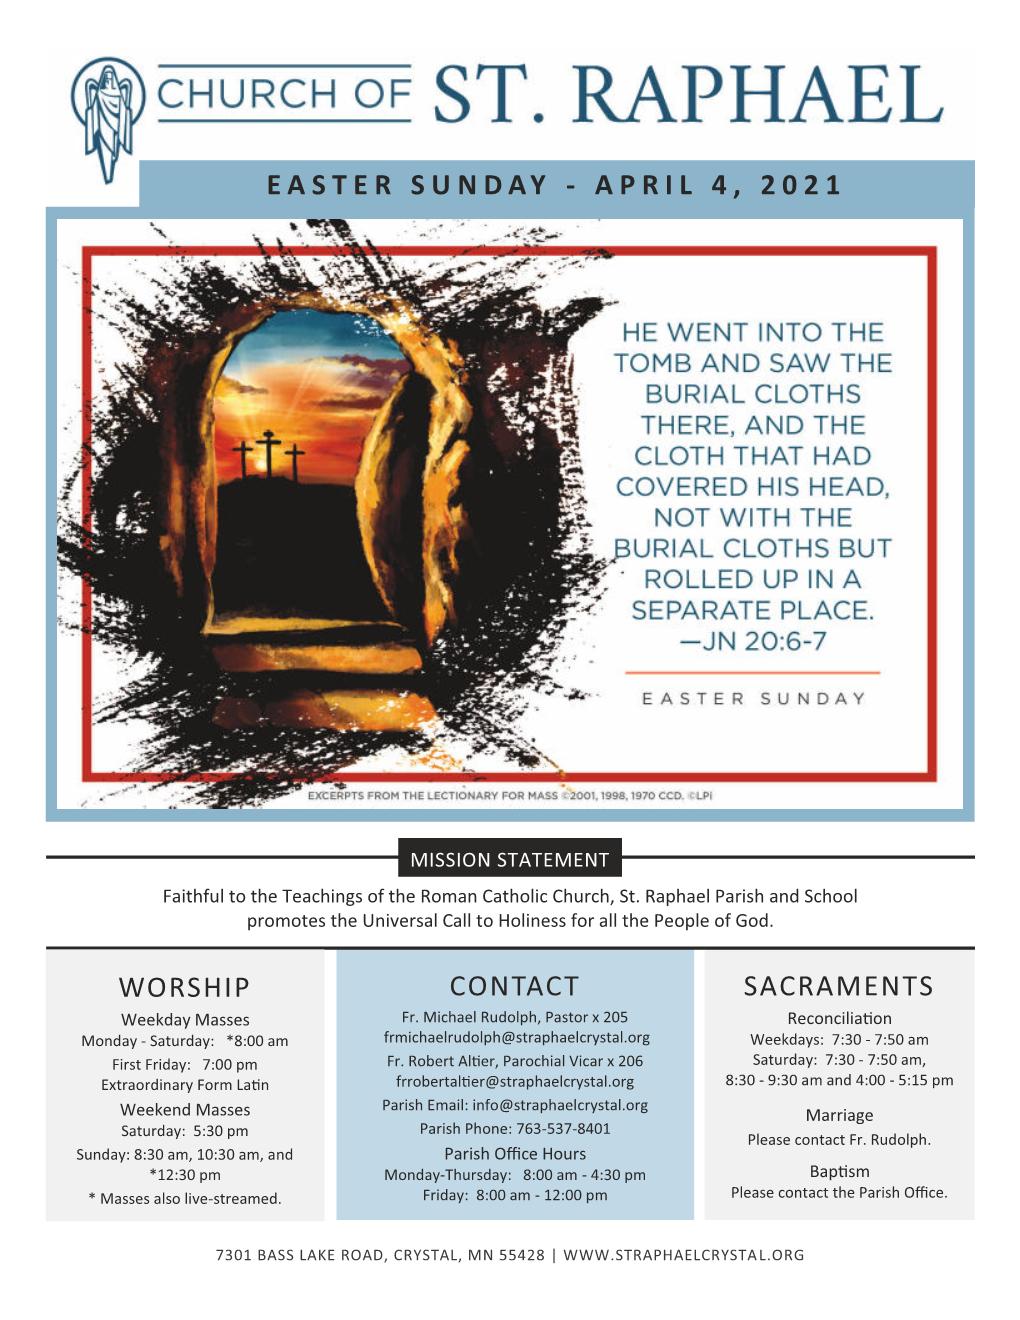 Contact Sacraments Easter Sunday